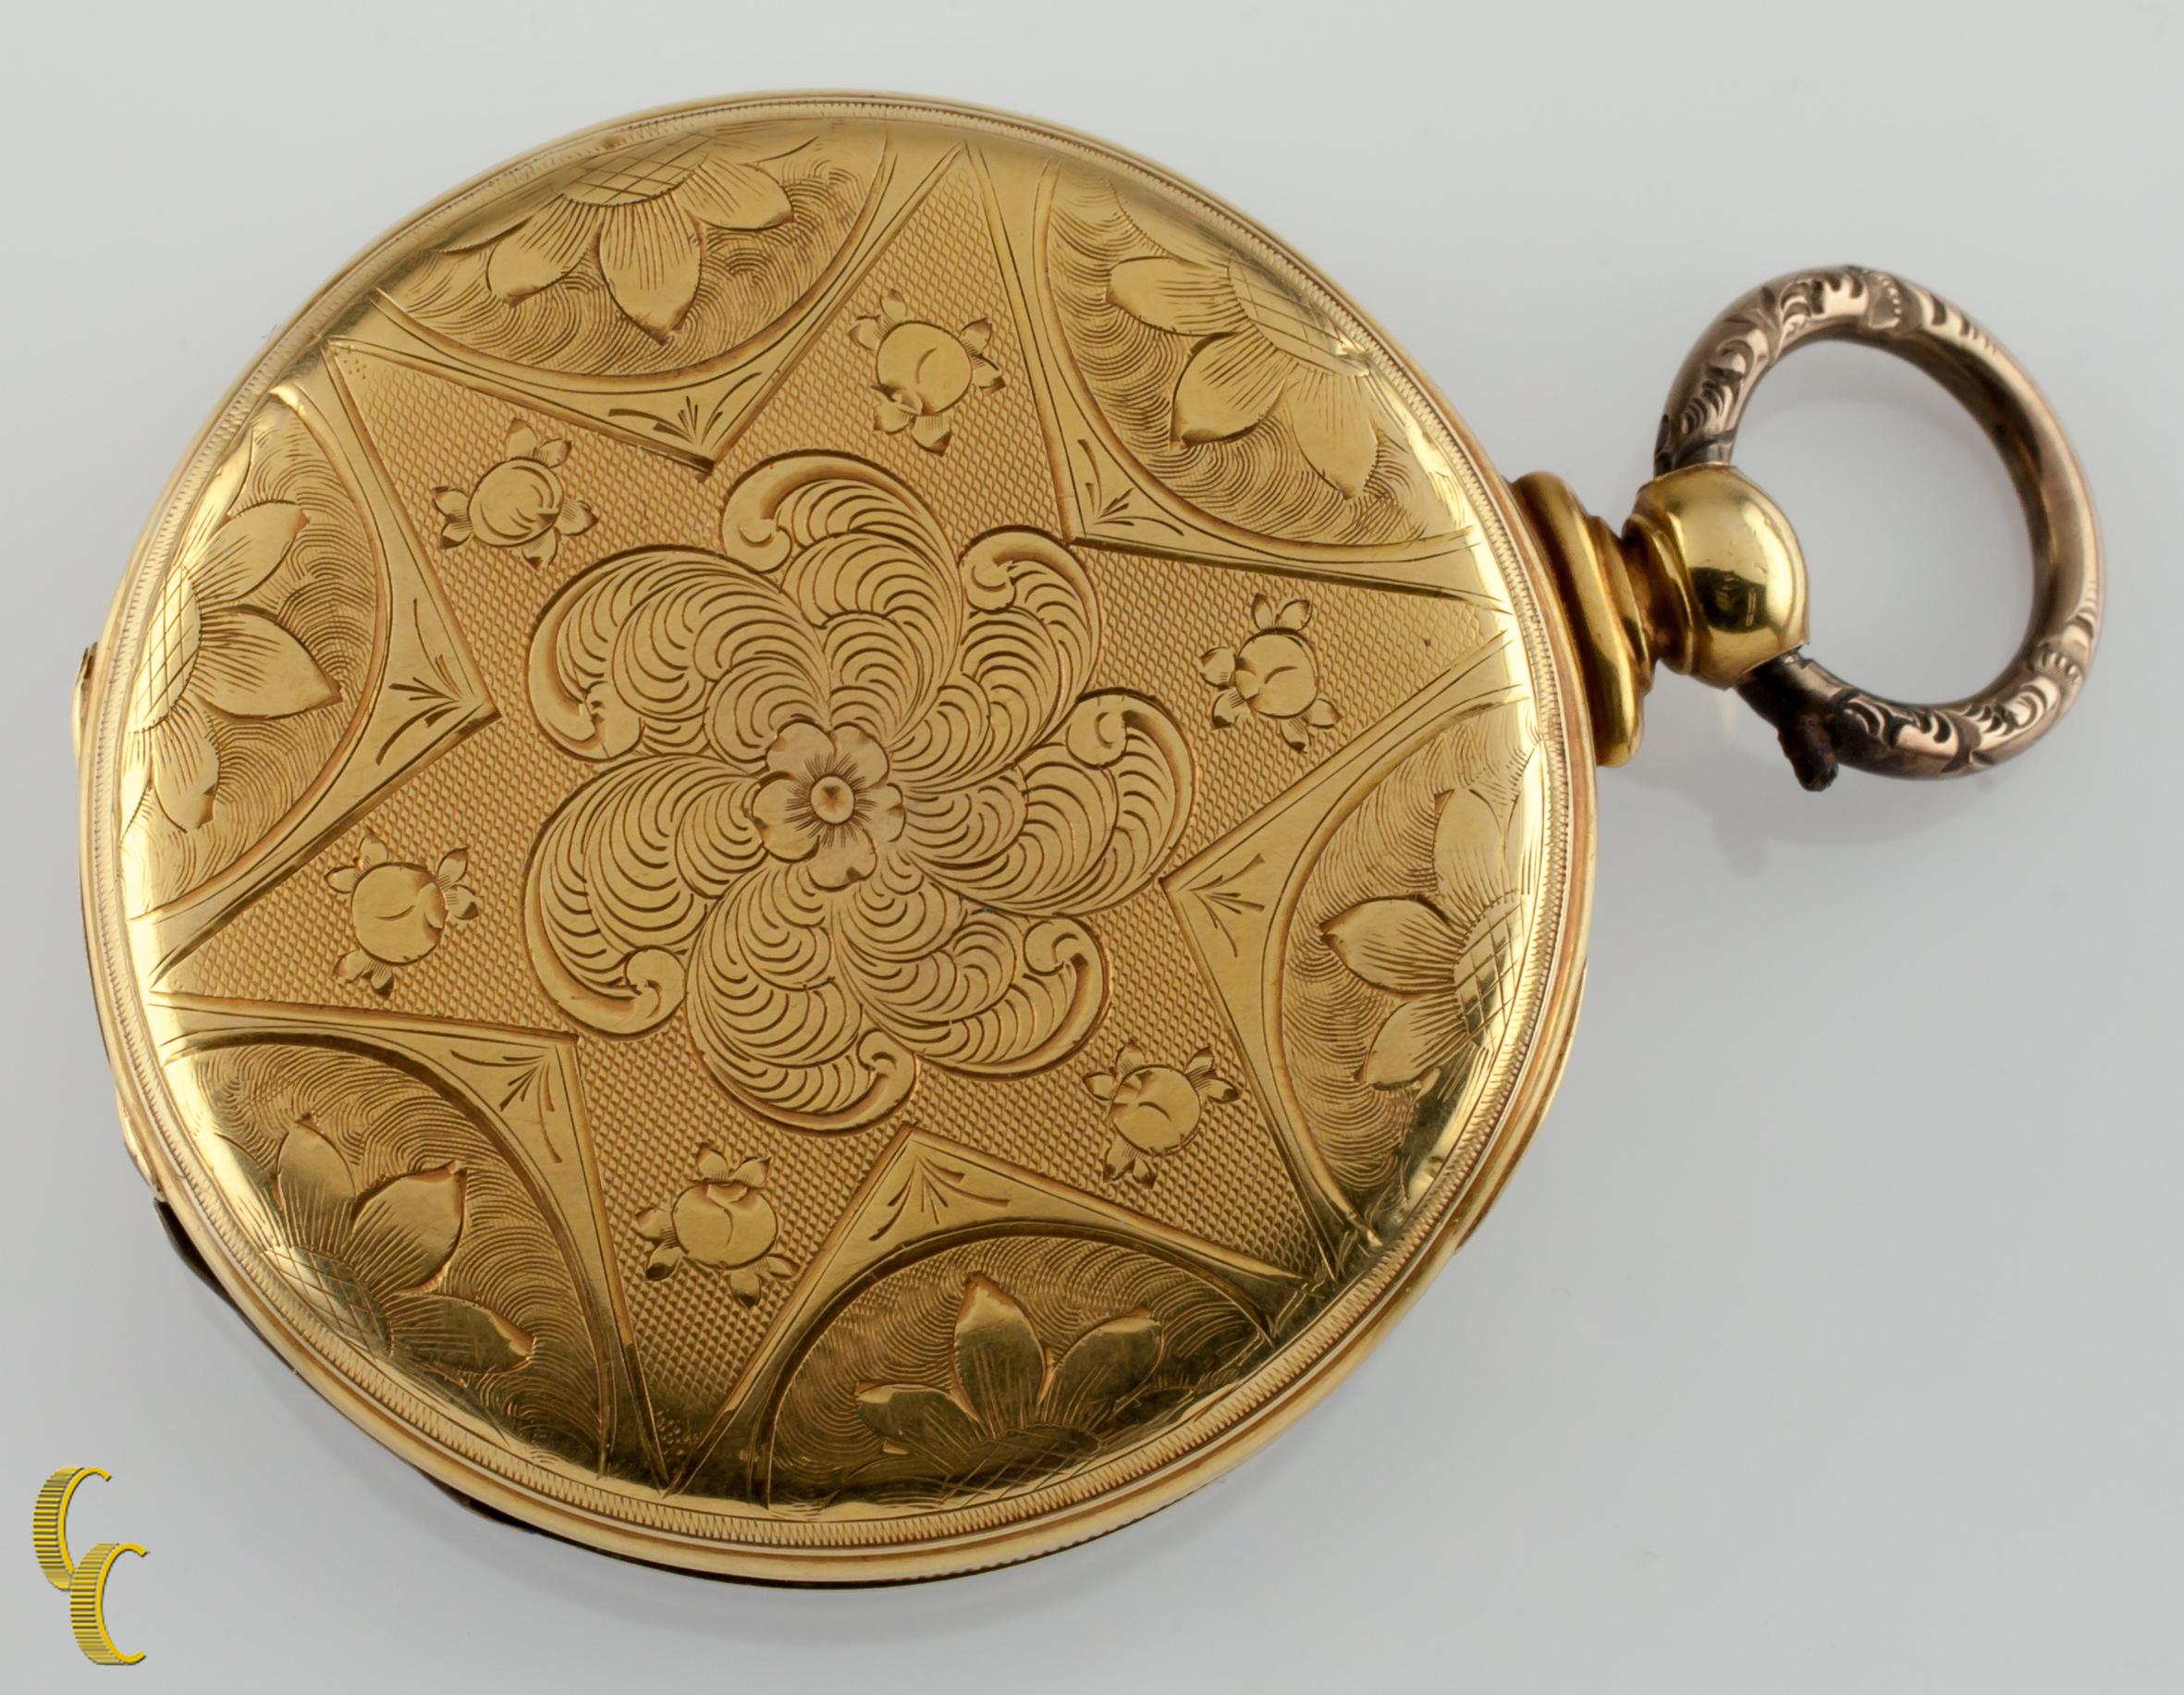 16th century pocket watch